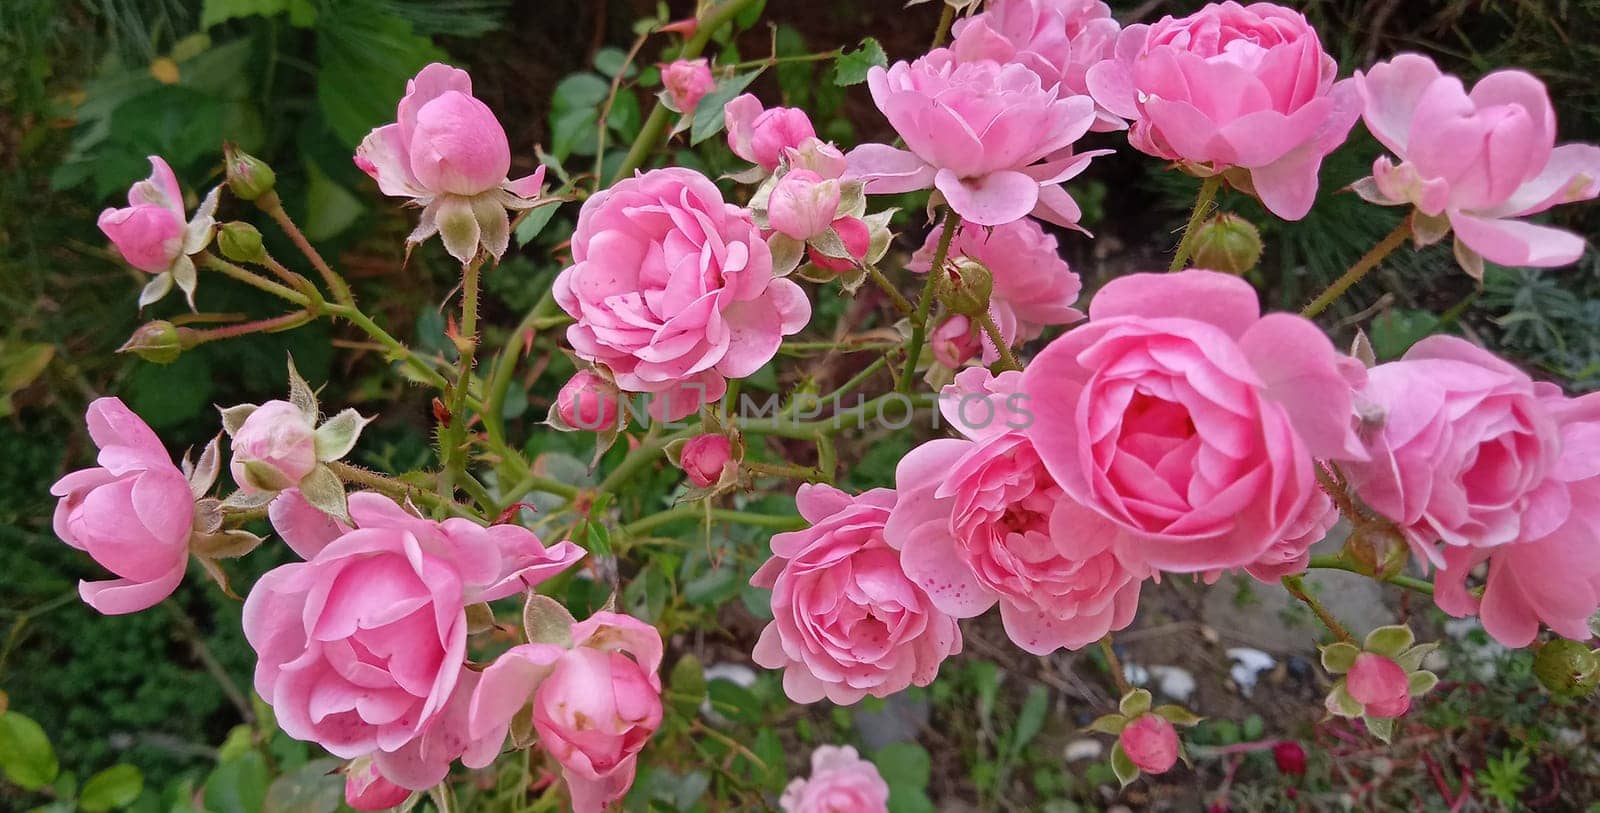 Bush of pink roses on bright summer day in garden by fireFLYart